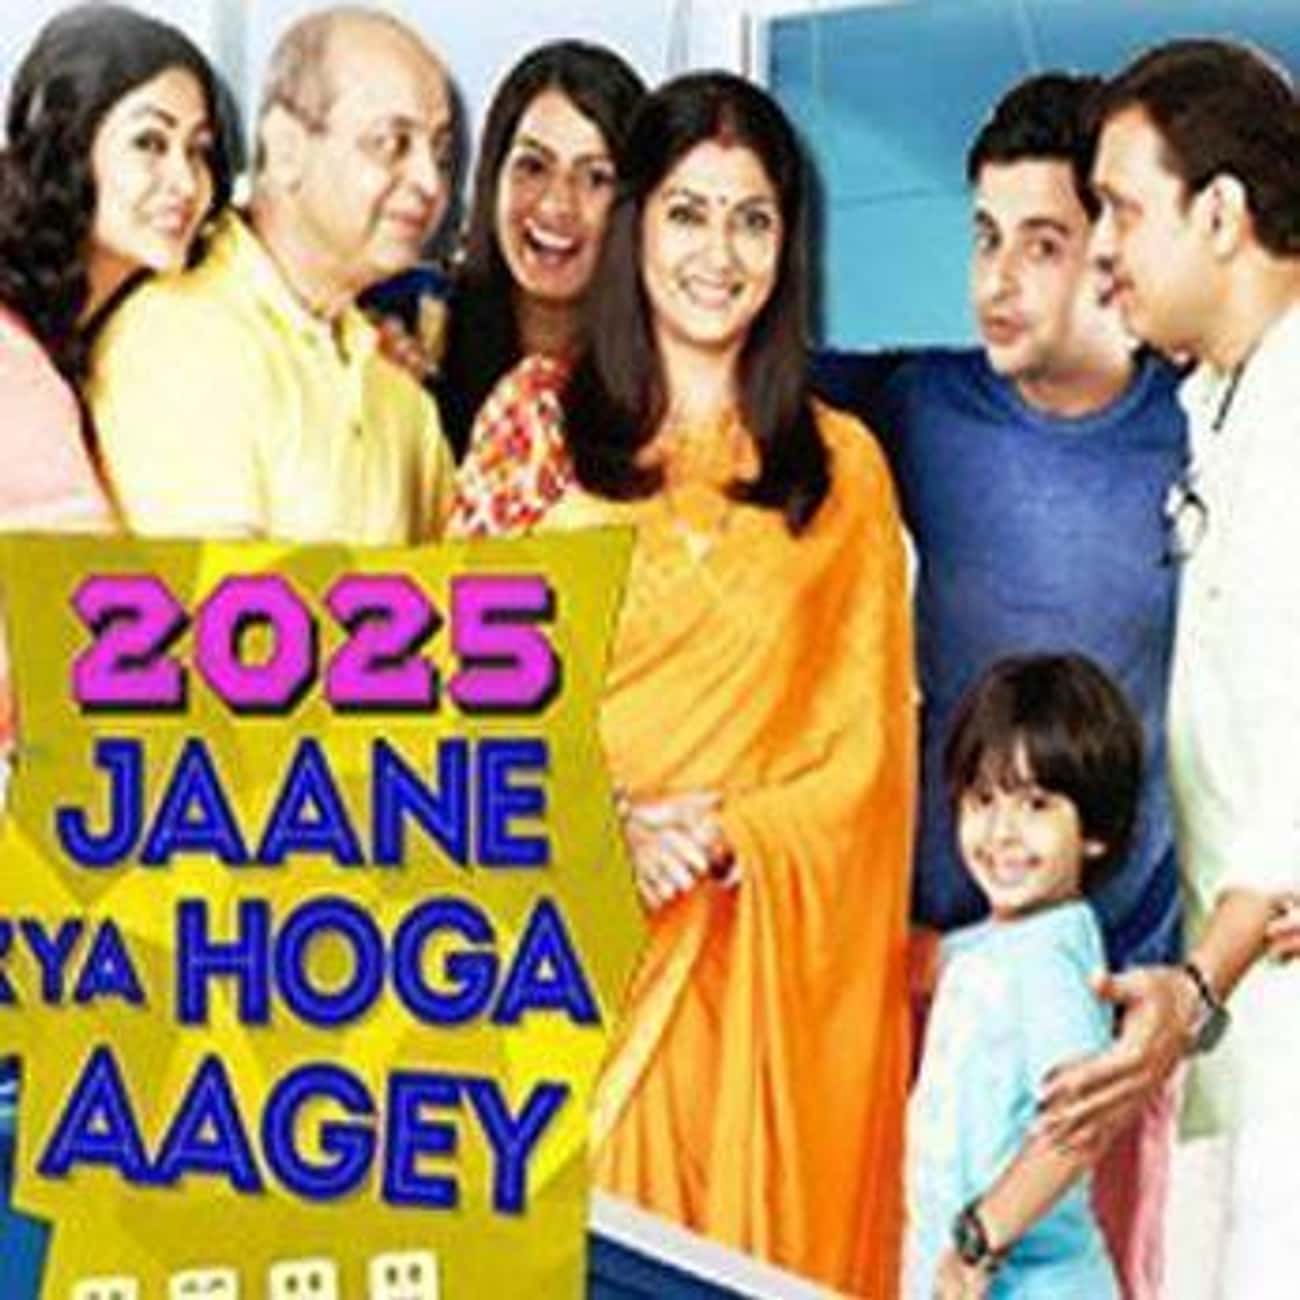 2025 Jaane Kya Hoga Aage